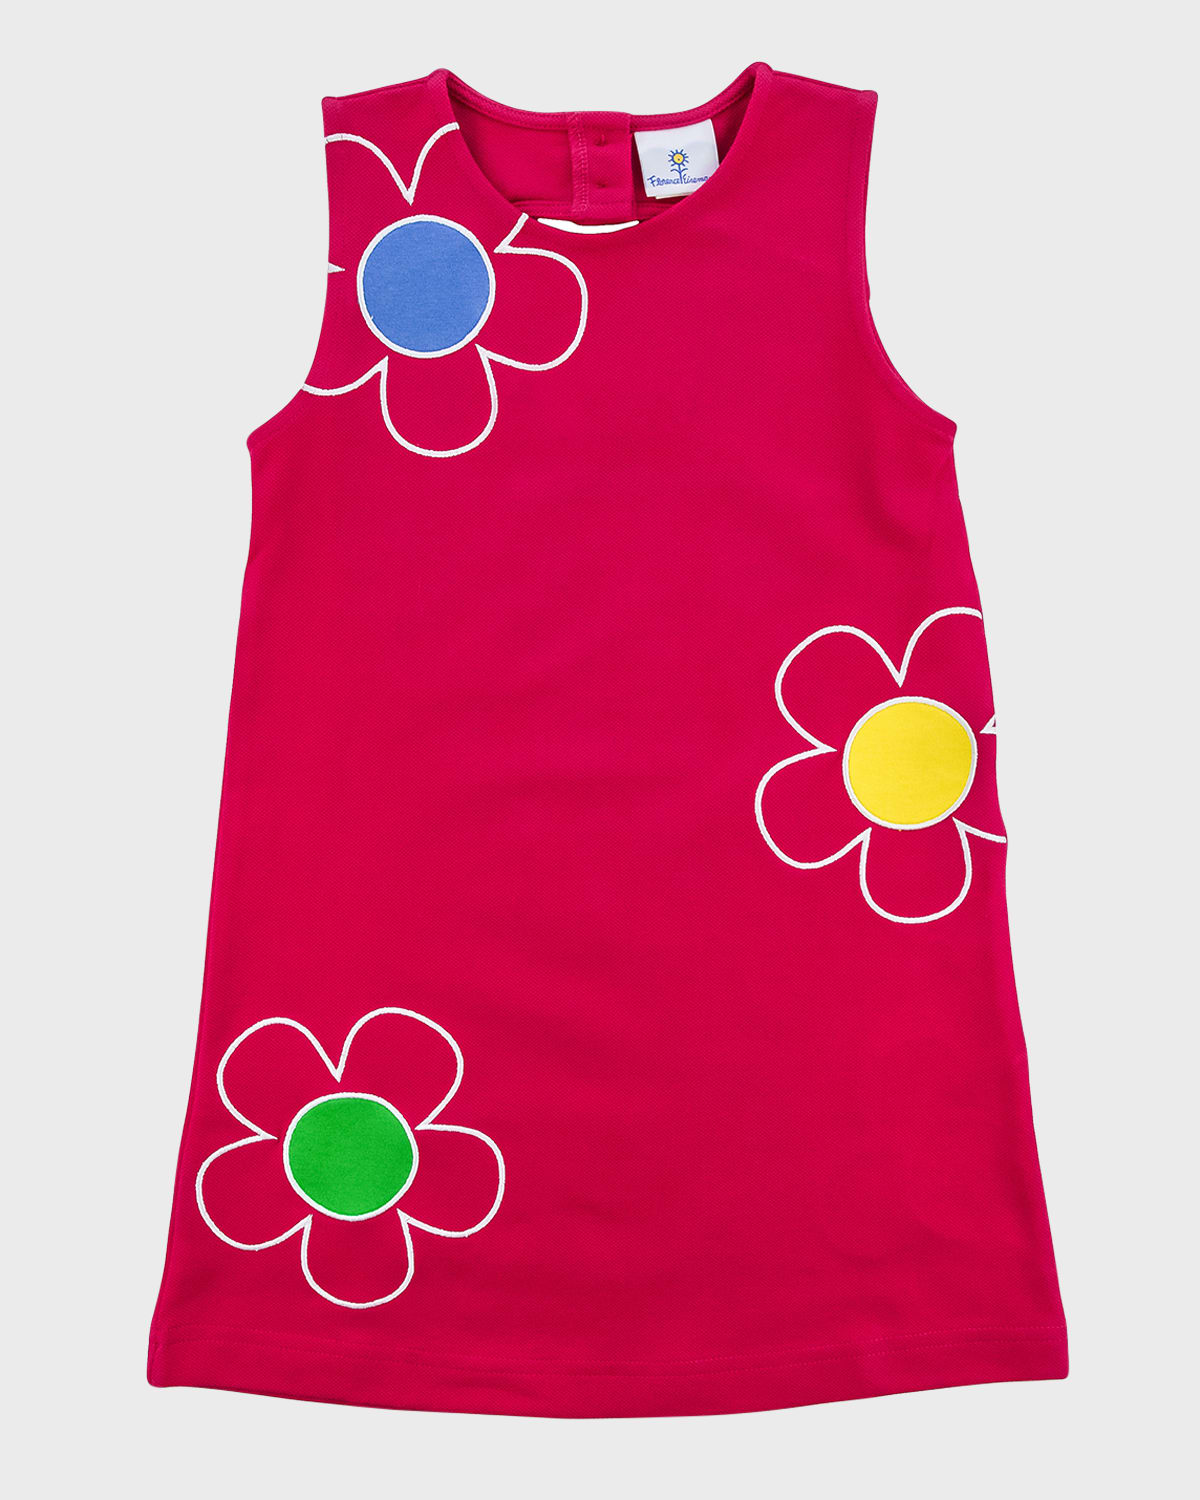 Girl's Knit Pique Dress W/ Large Flowers, Size 2-6X